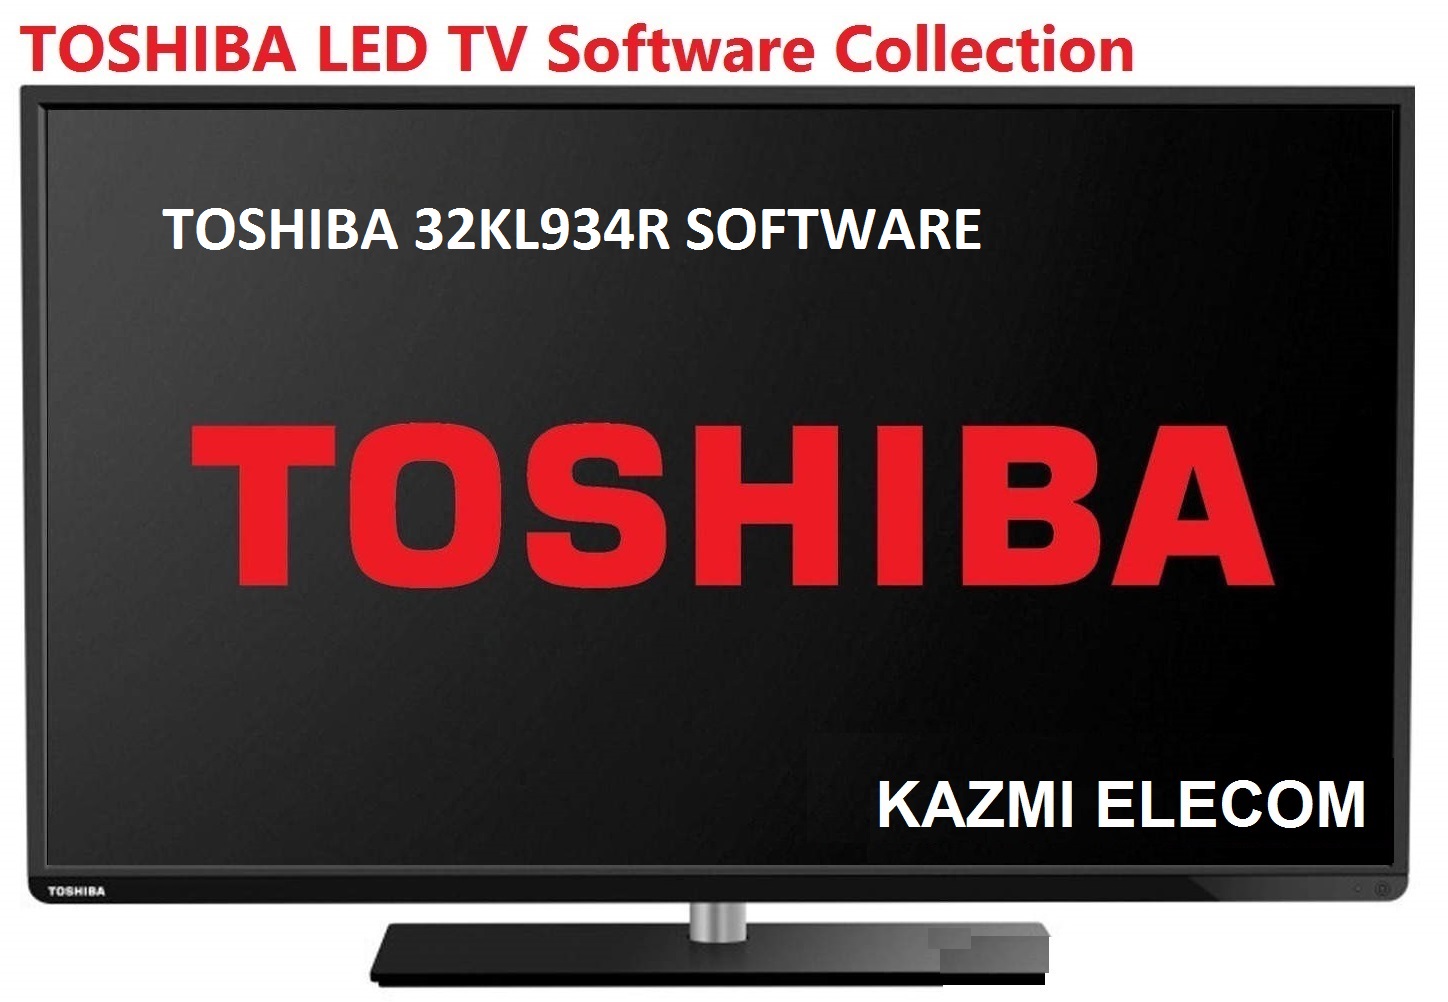 Toshiba 32Kl934R